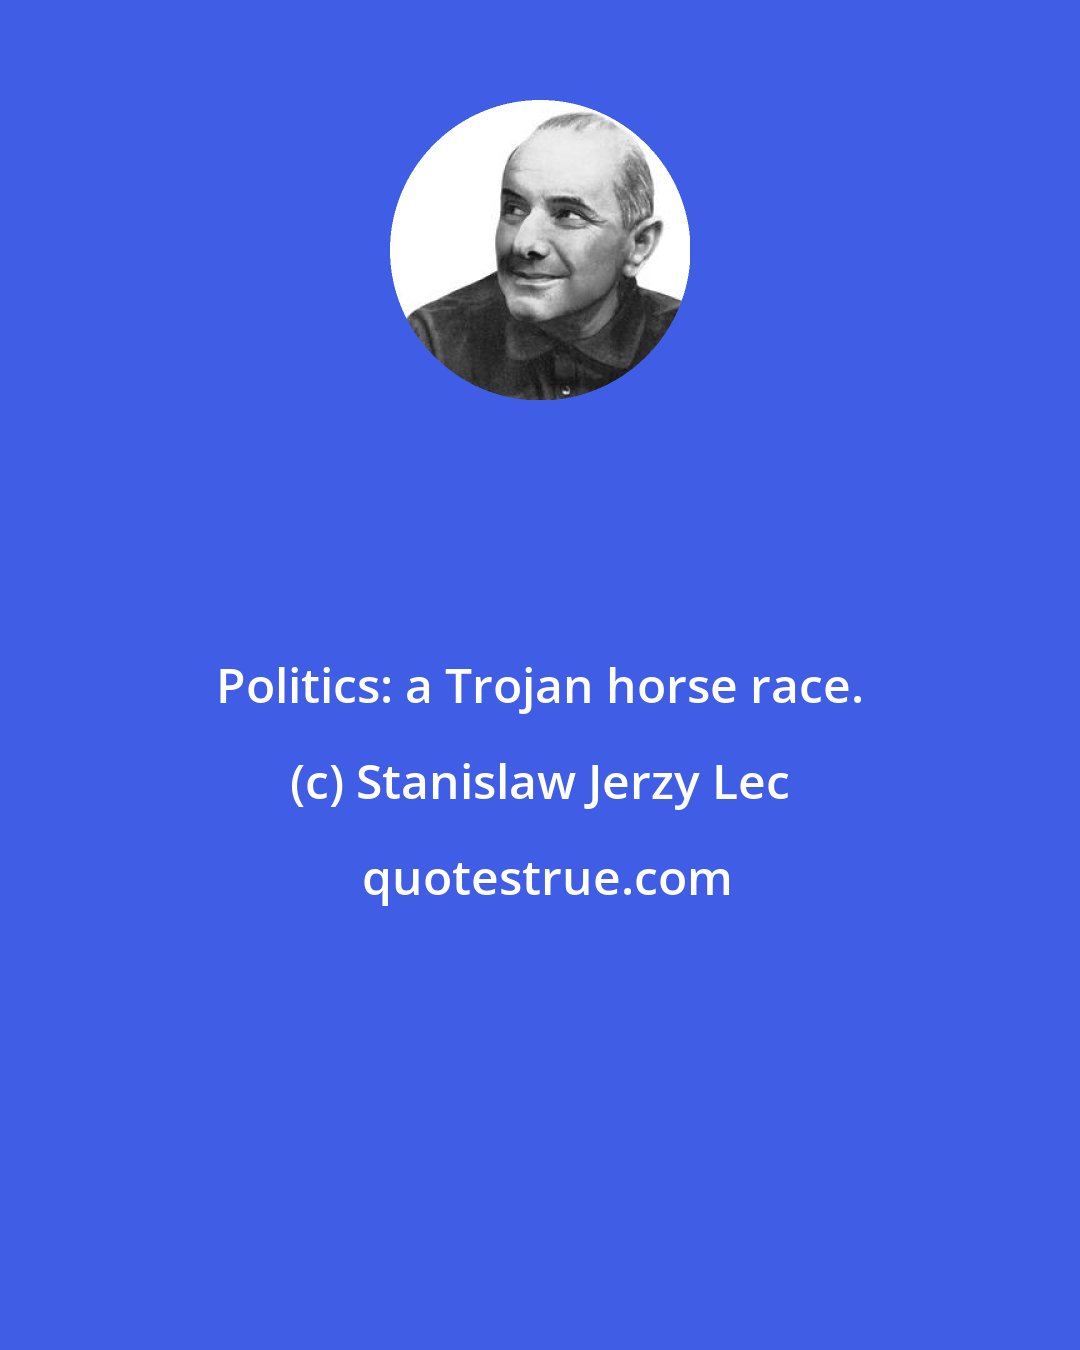 Stanislaw Jerzy Lec: Politics: a Trojan horse race.